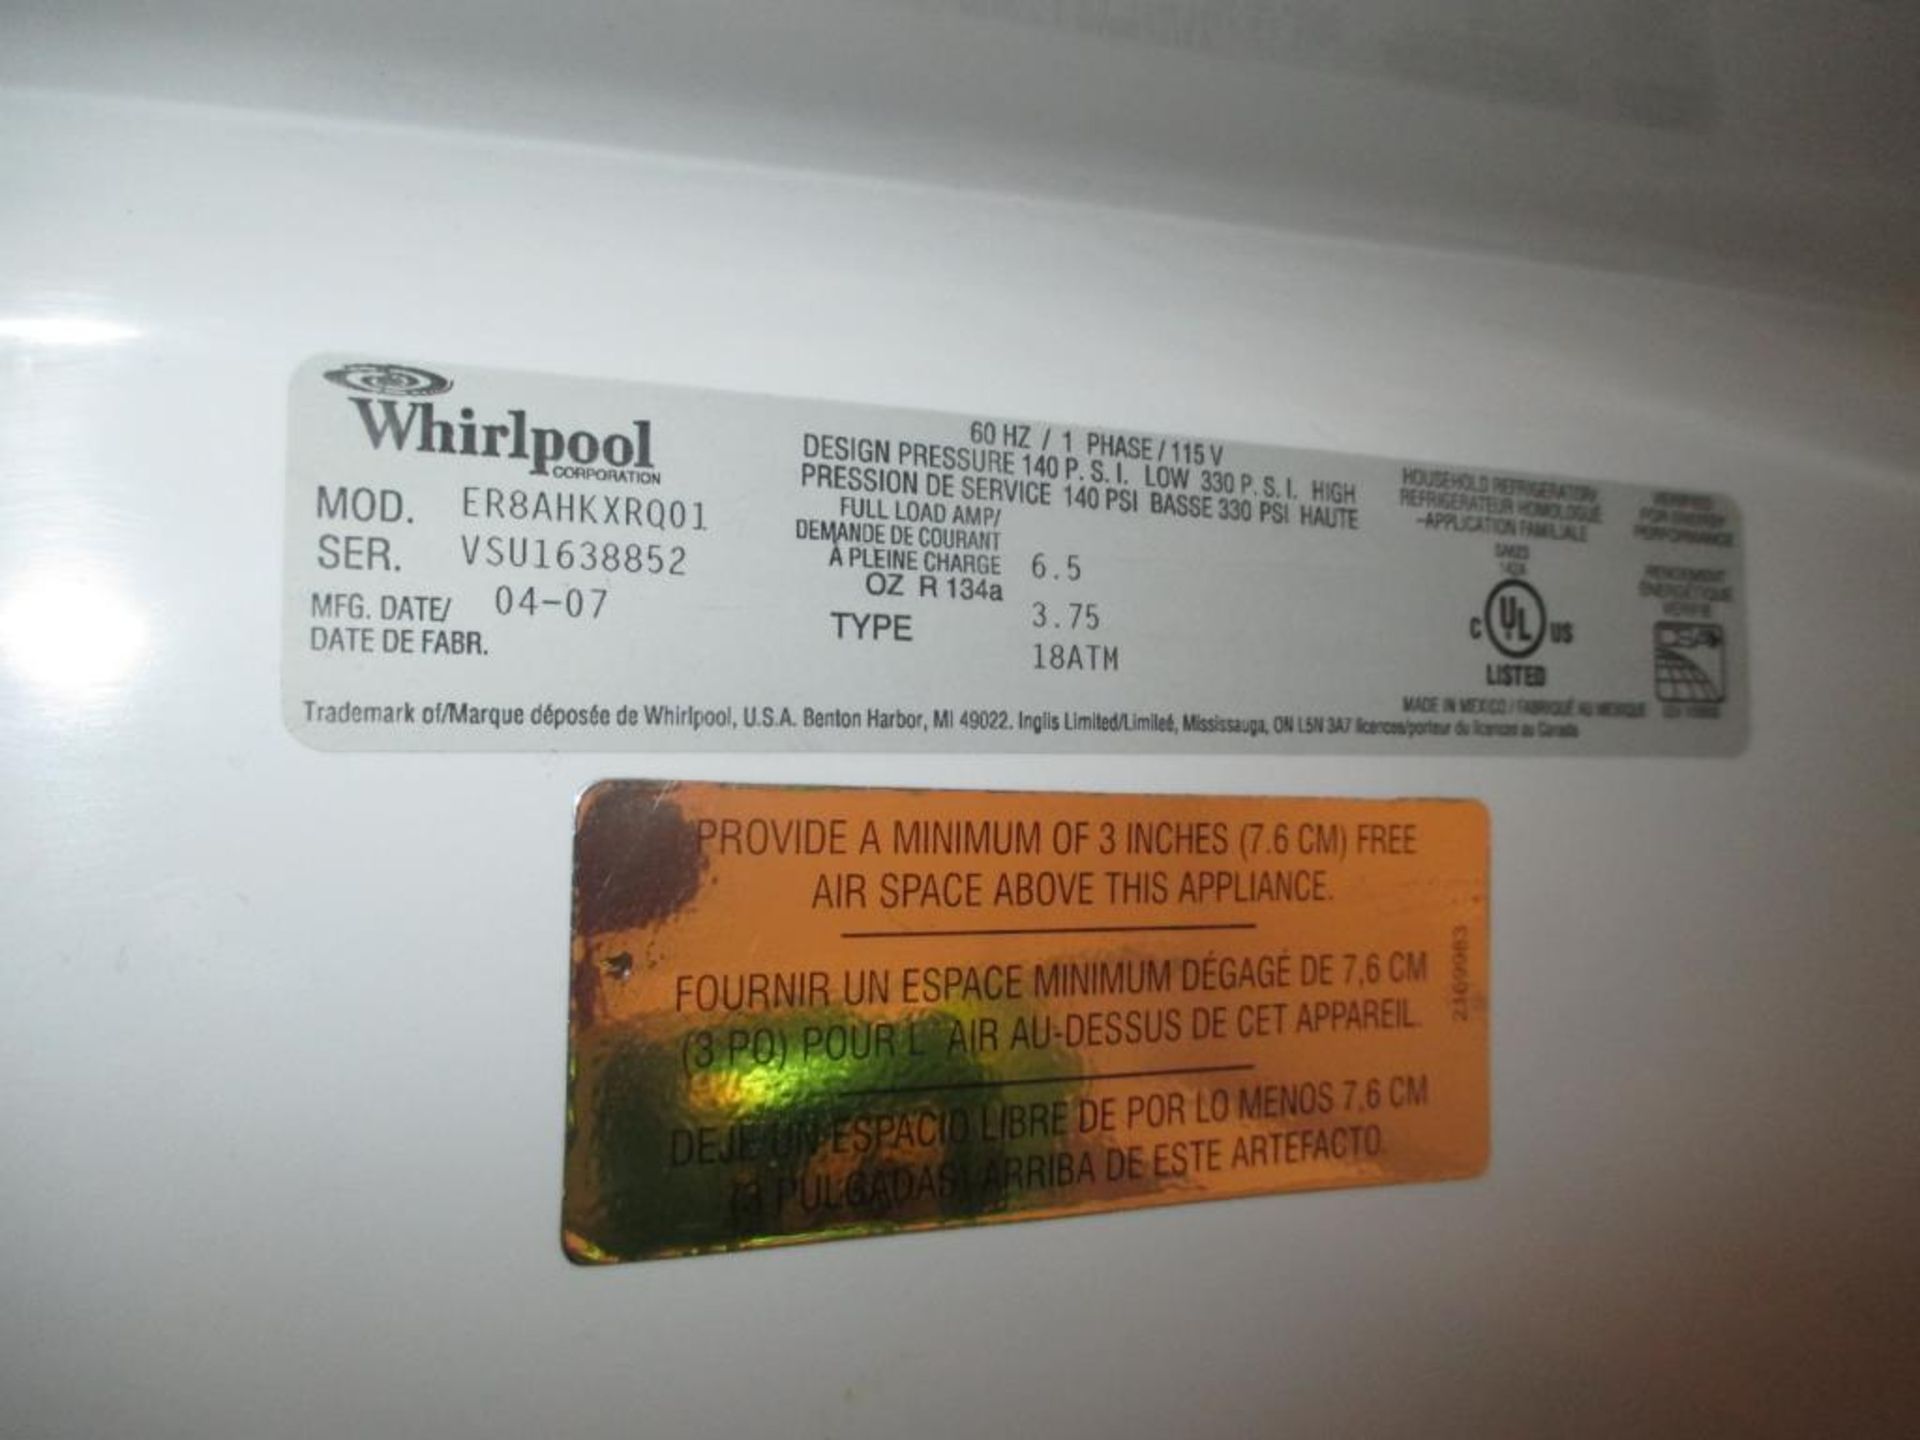 Whirlpool ER8AHKXRQ01 White Top Freezer Refrigerator. SN# VSU1638852. HIT# 2174453. Warehouse. Asset - Image 2 of 2